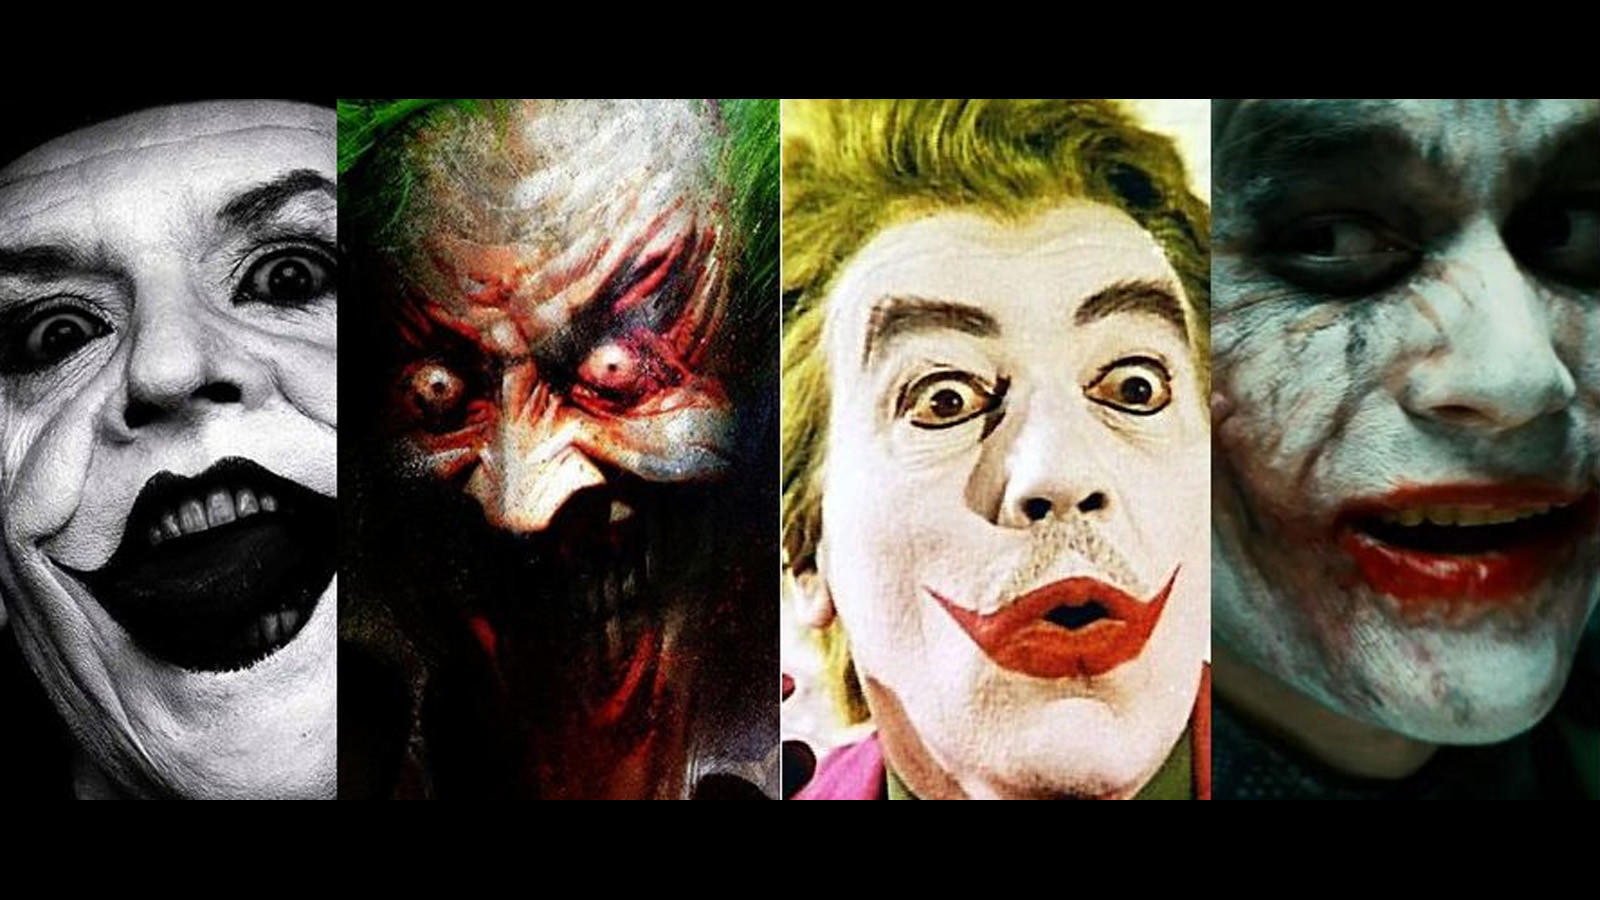 Joker origin movie in development with Hangover director Todd Phillips  LA Times